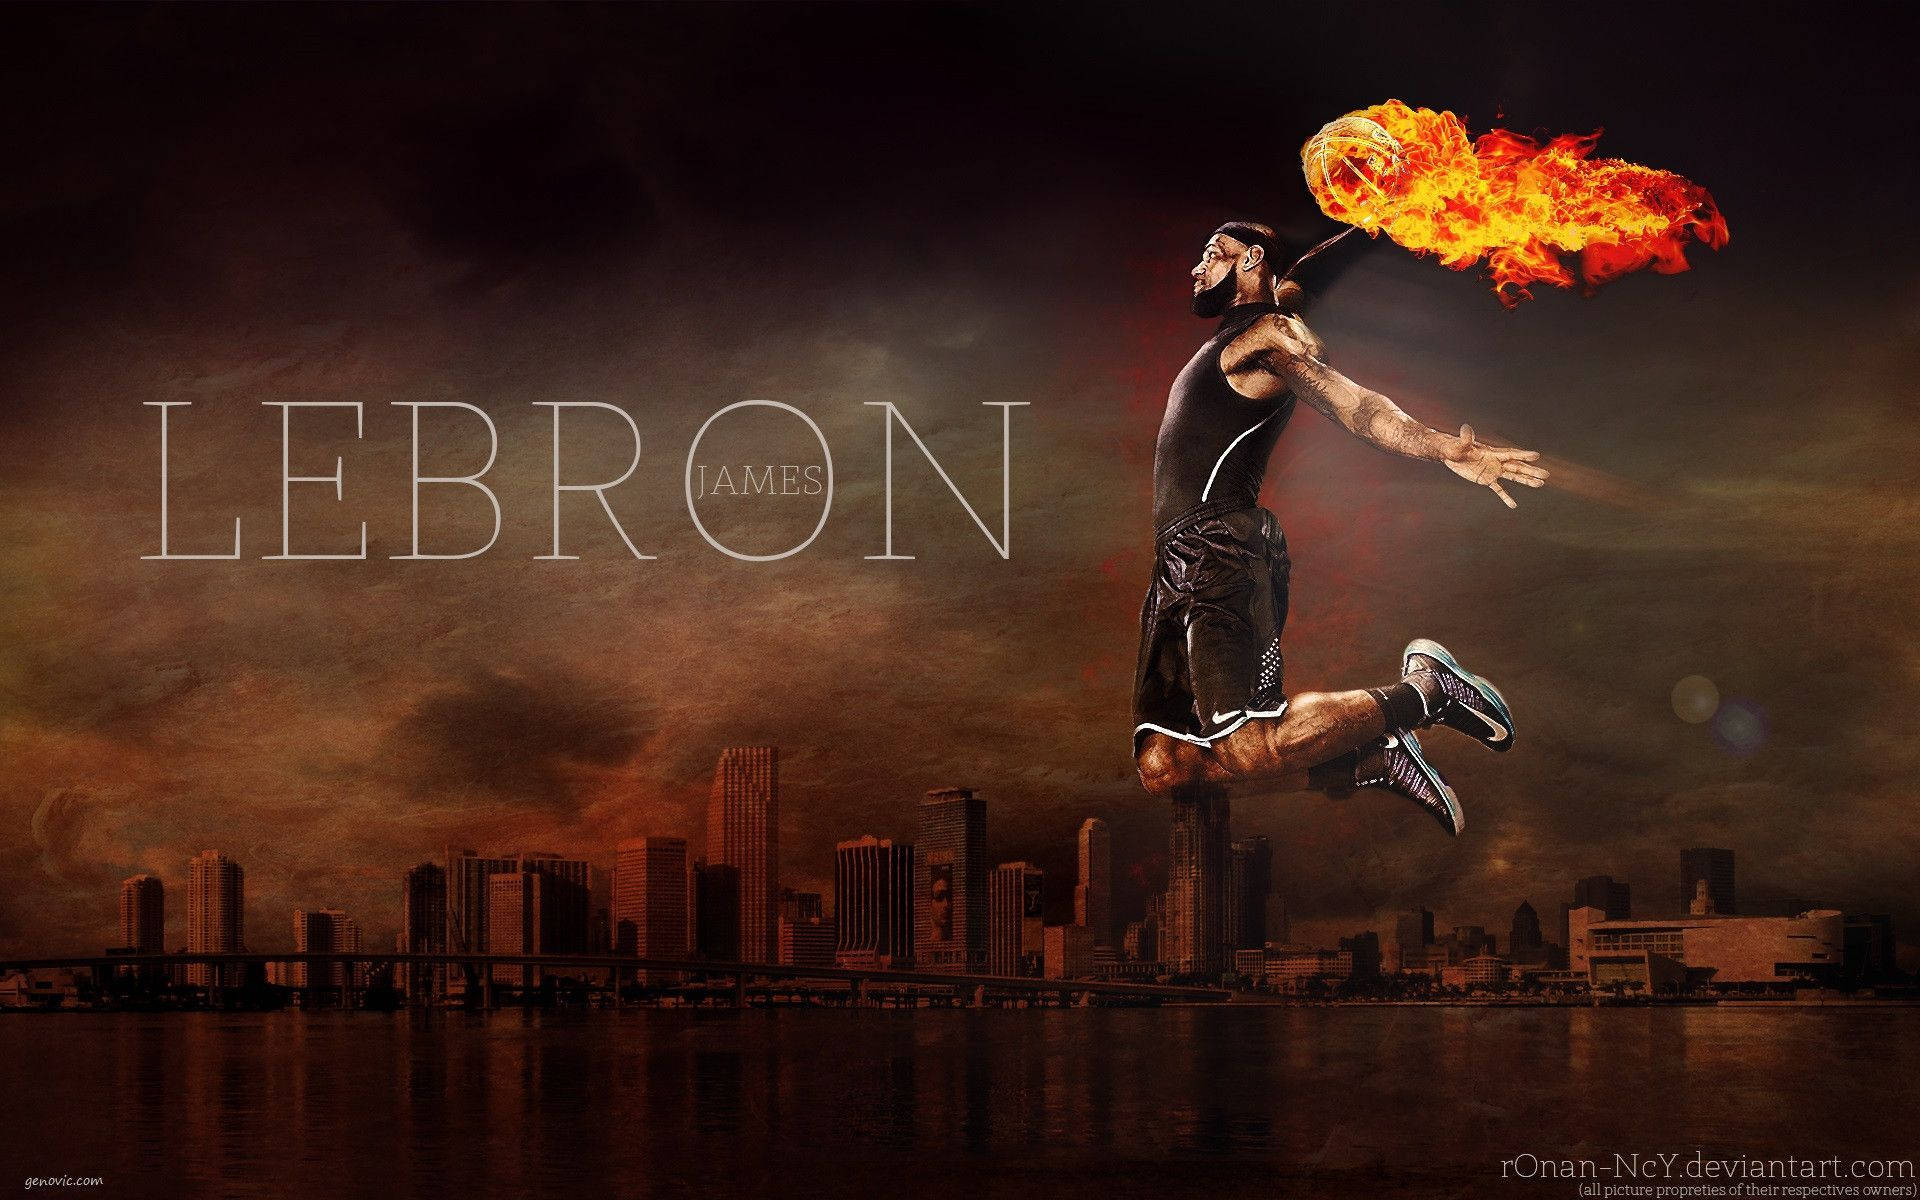 Lebron James Basketball Slam Dunk Ball On Fire Wallpaper